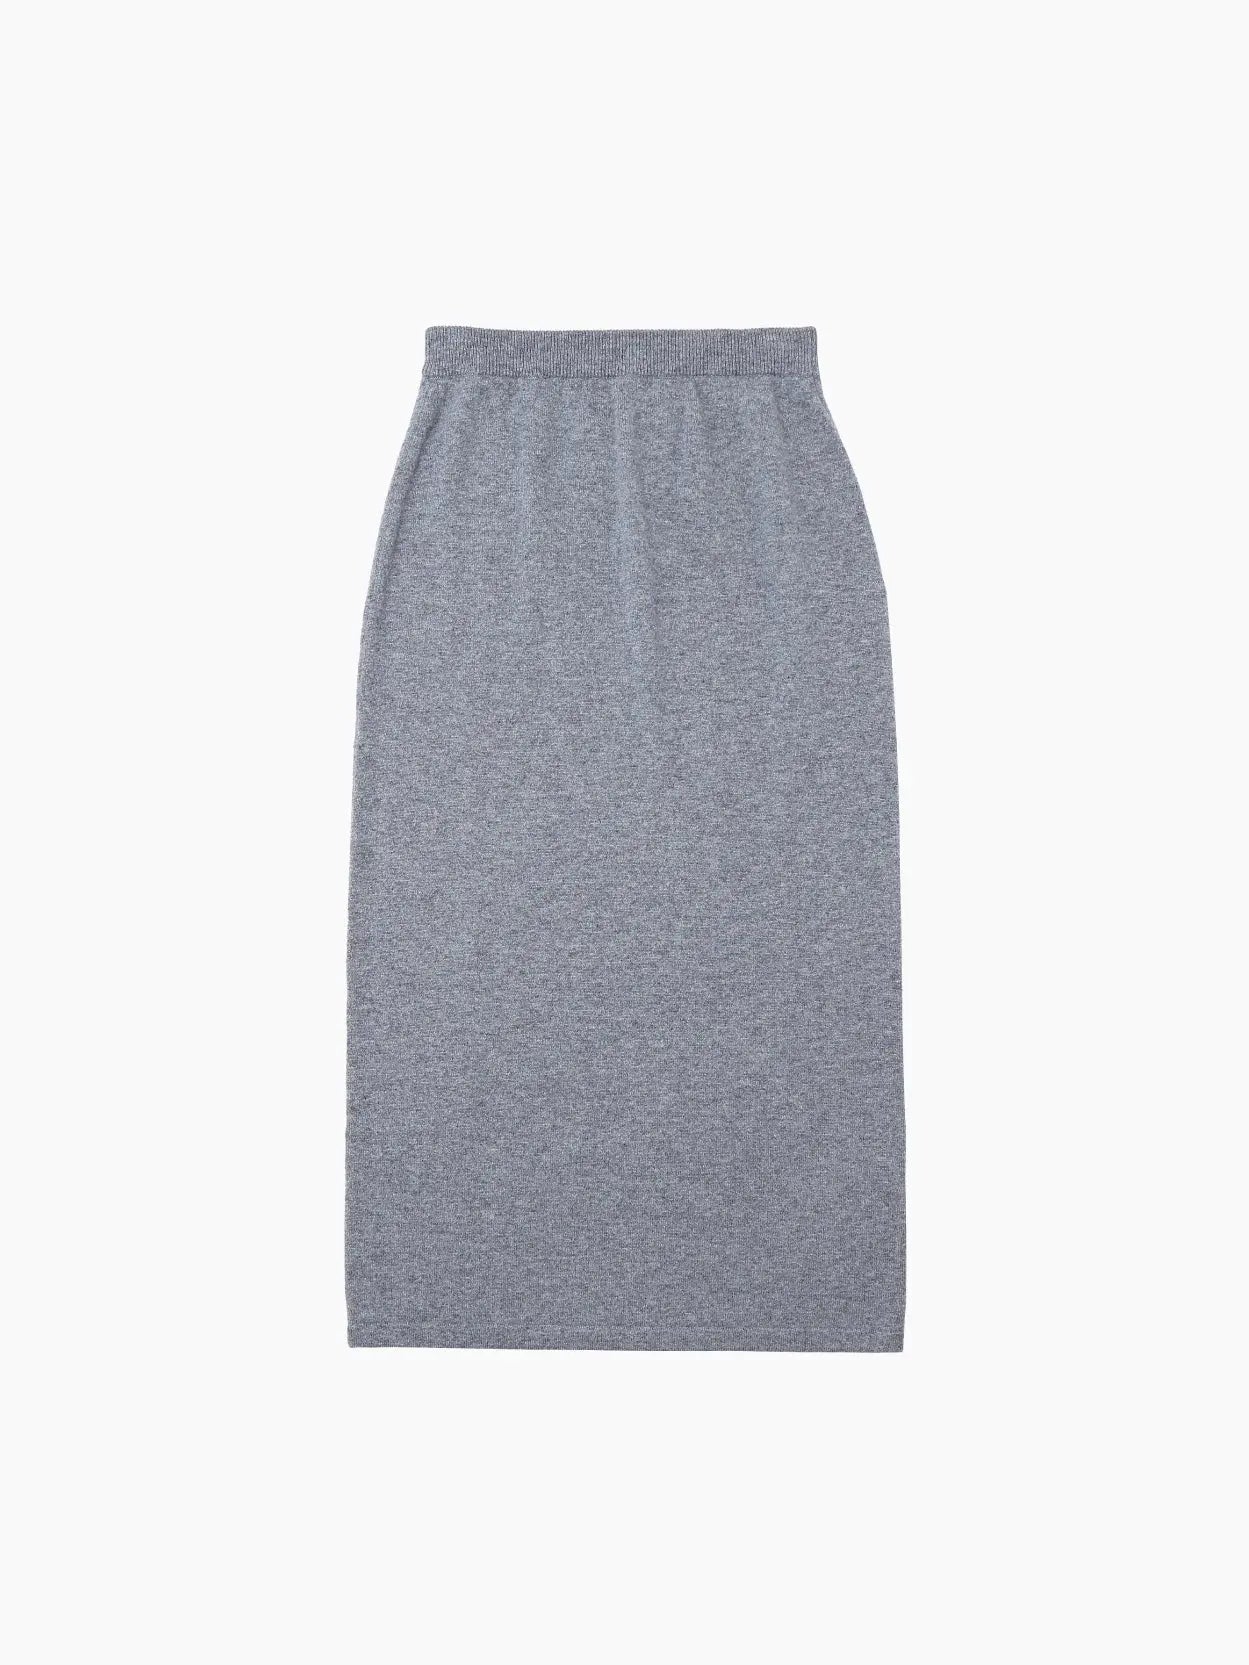 Ley Skirt Grey Bielo